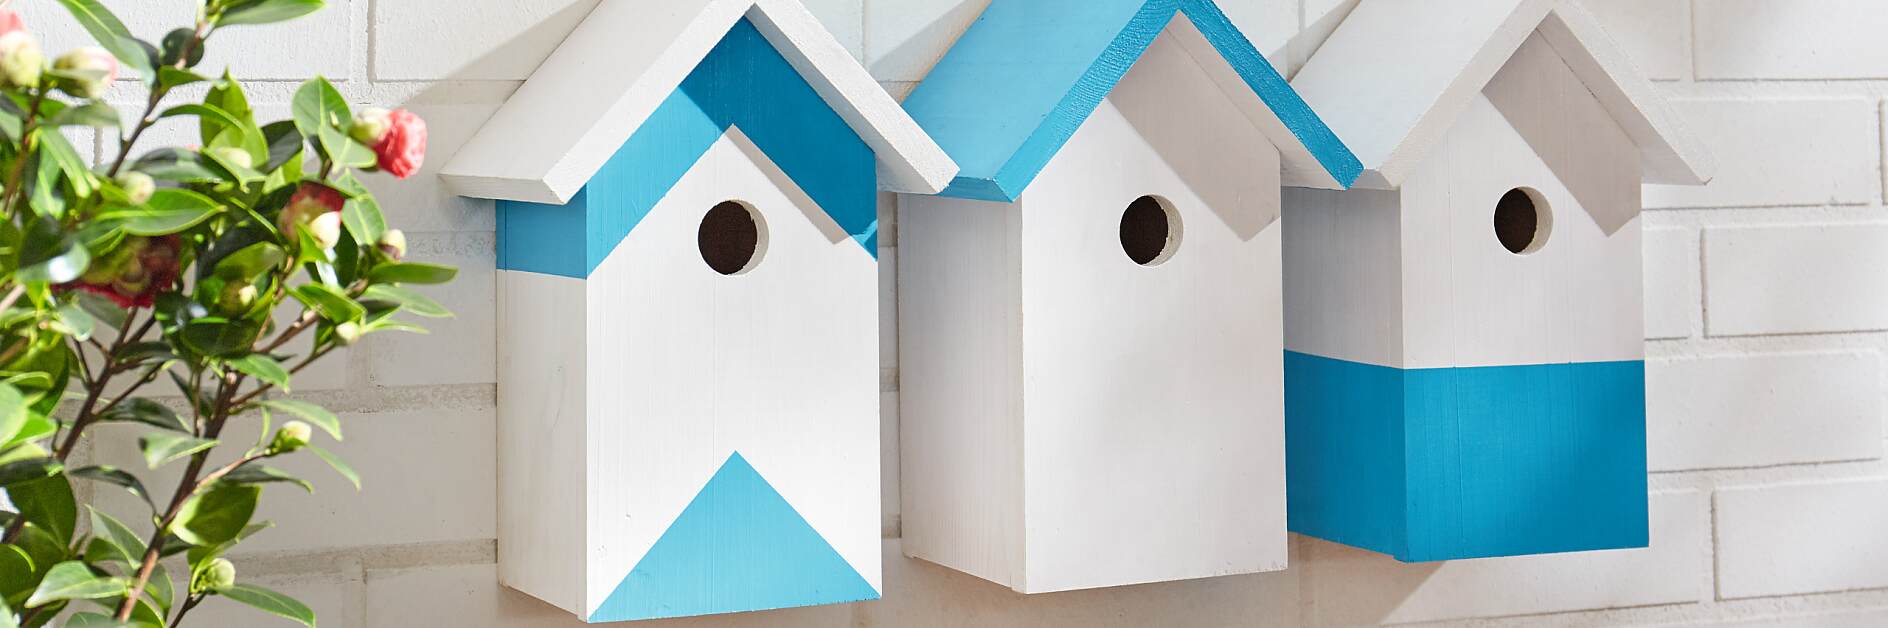 Create a row of stylish wooden bird houses